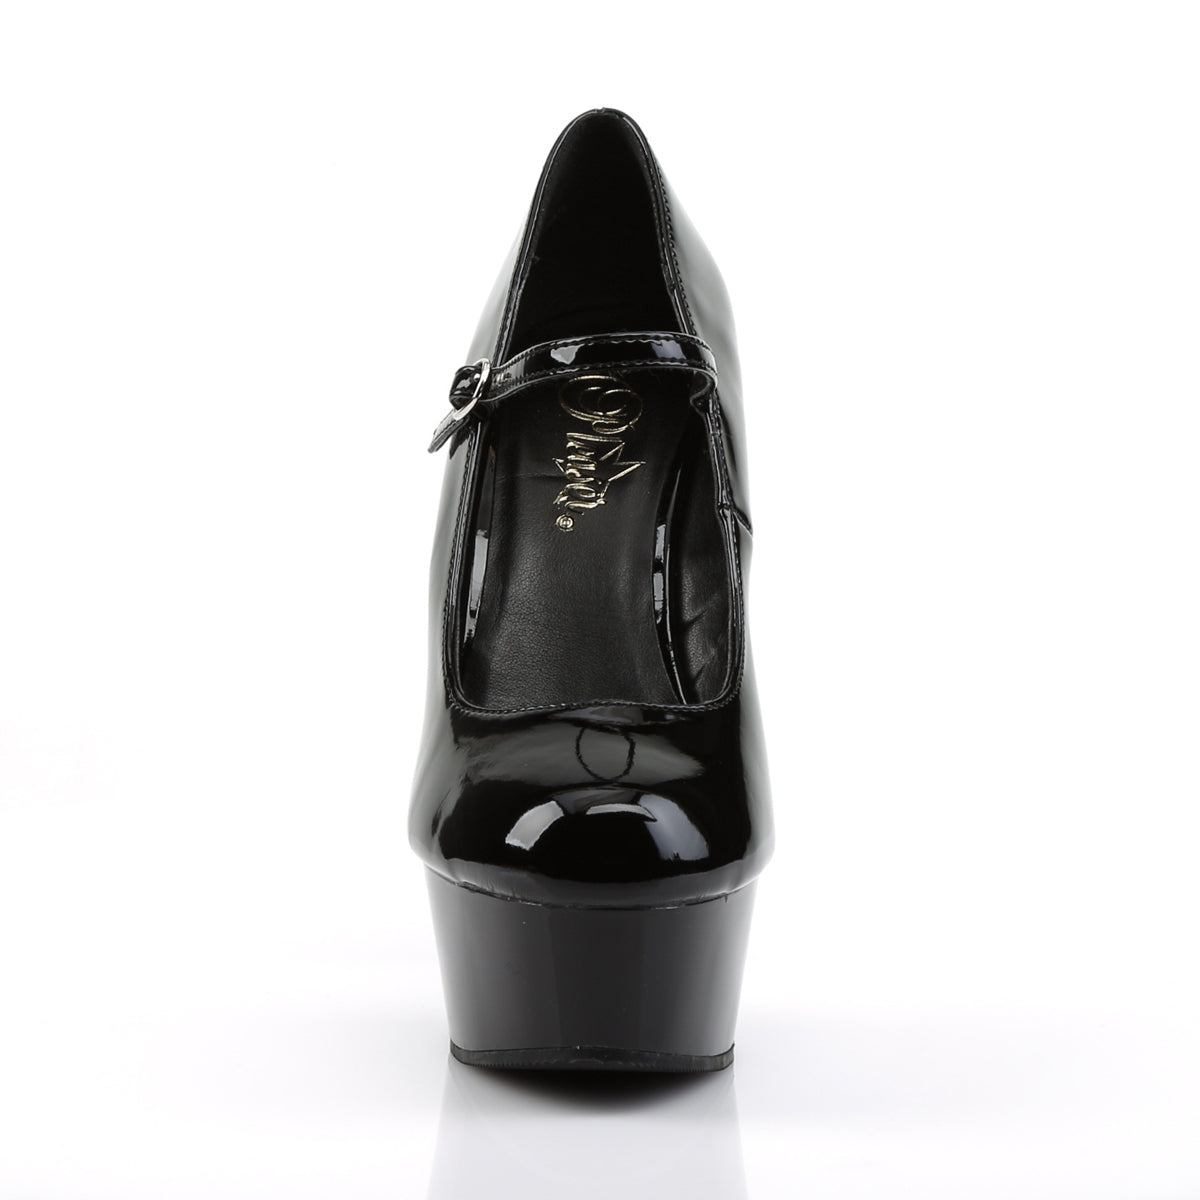 DELIGHT-687 6" Heel Black Patent Pole Dancing Platforms-Pleaser- Sexy Shoes Alternative Footwear